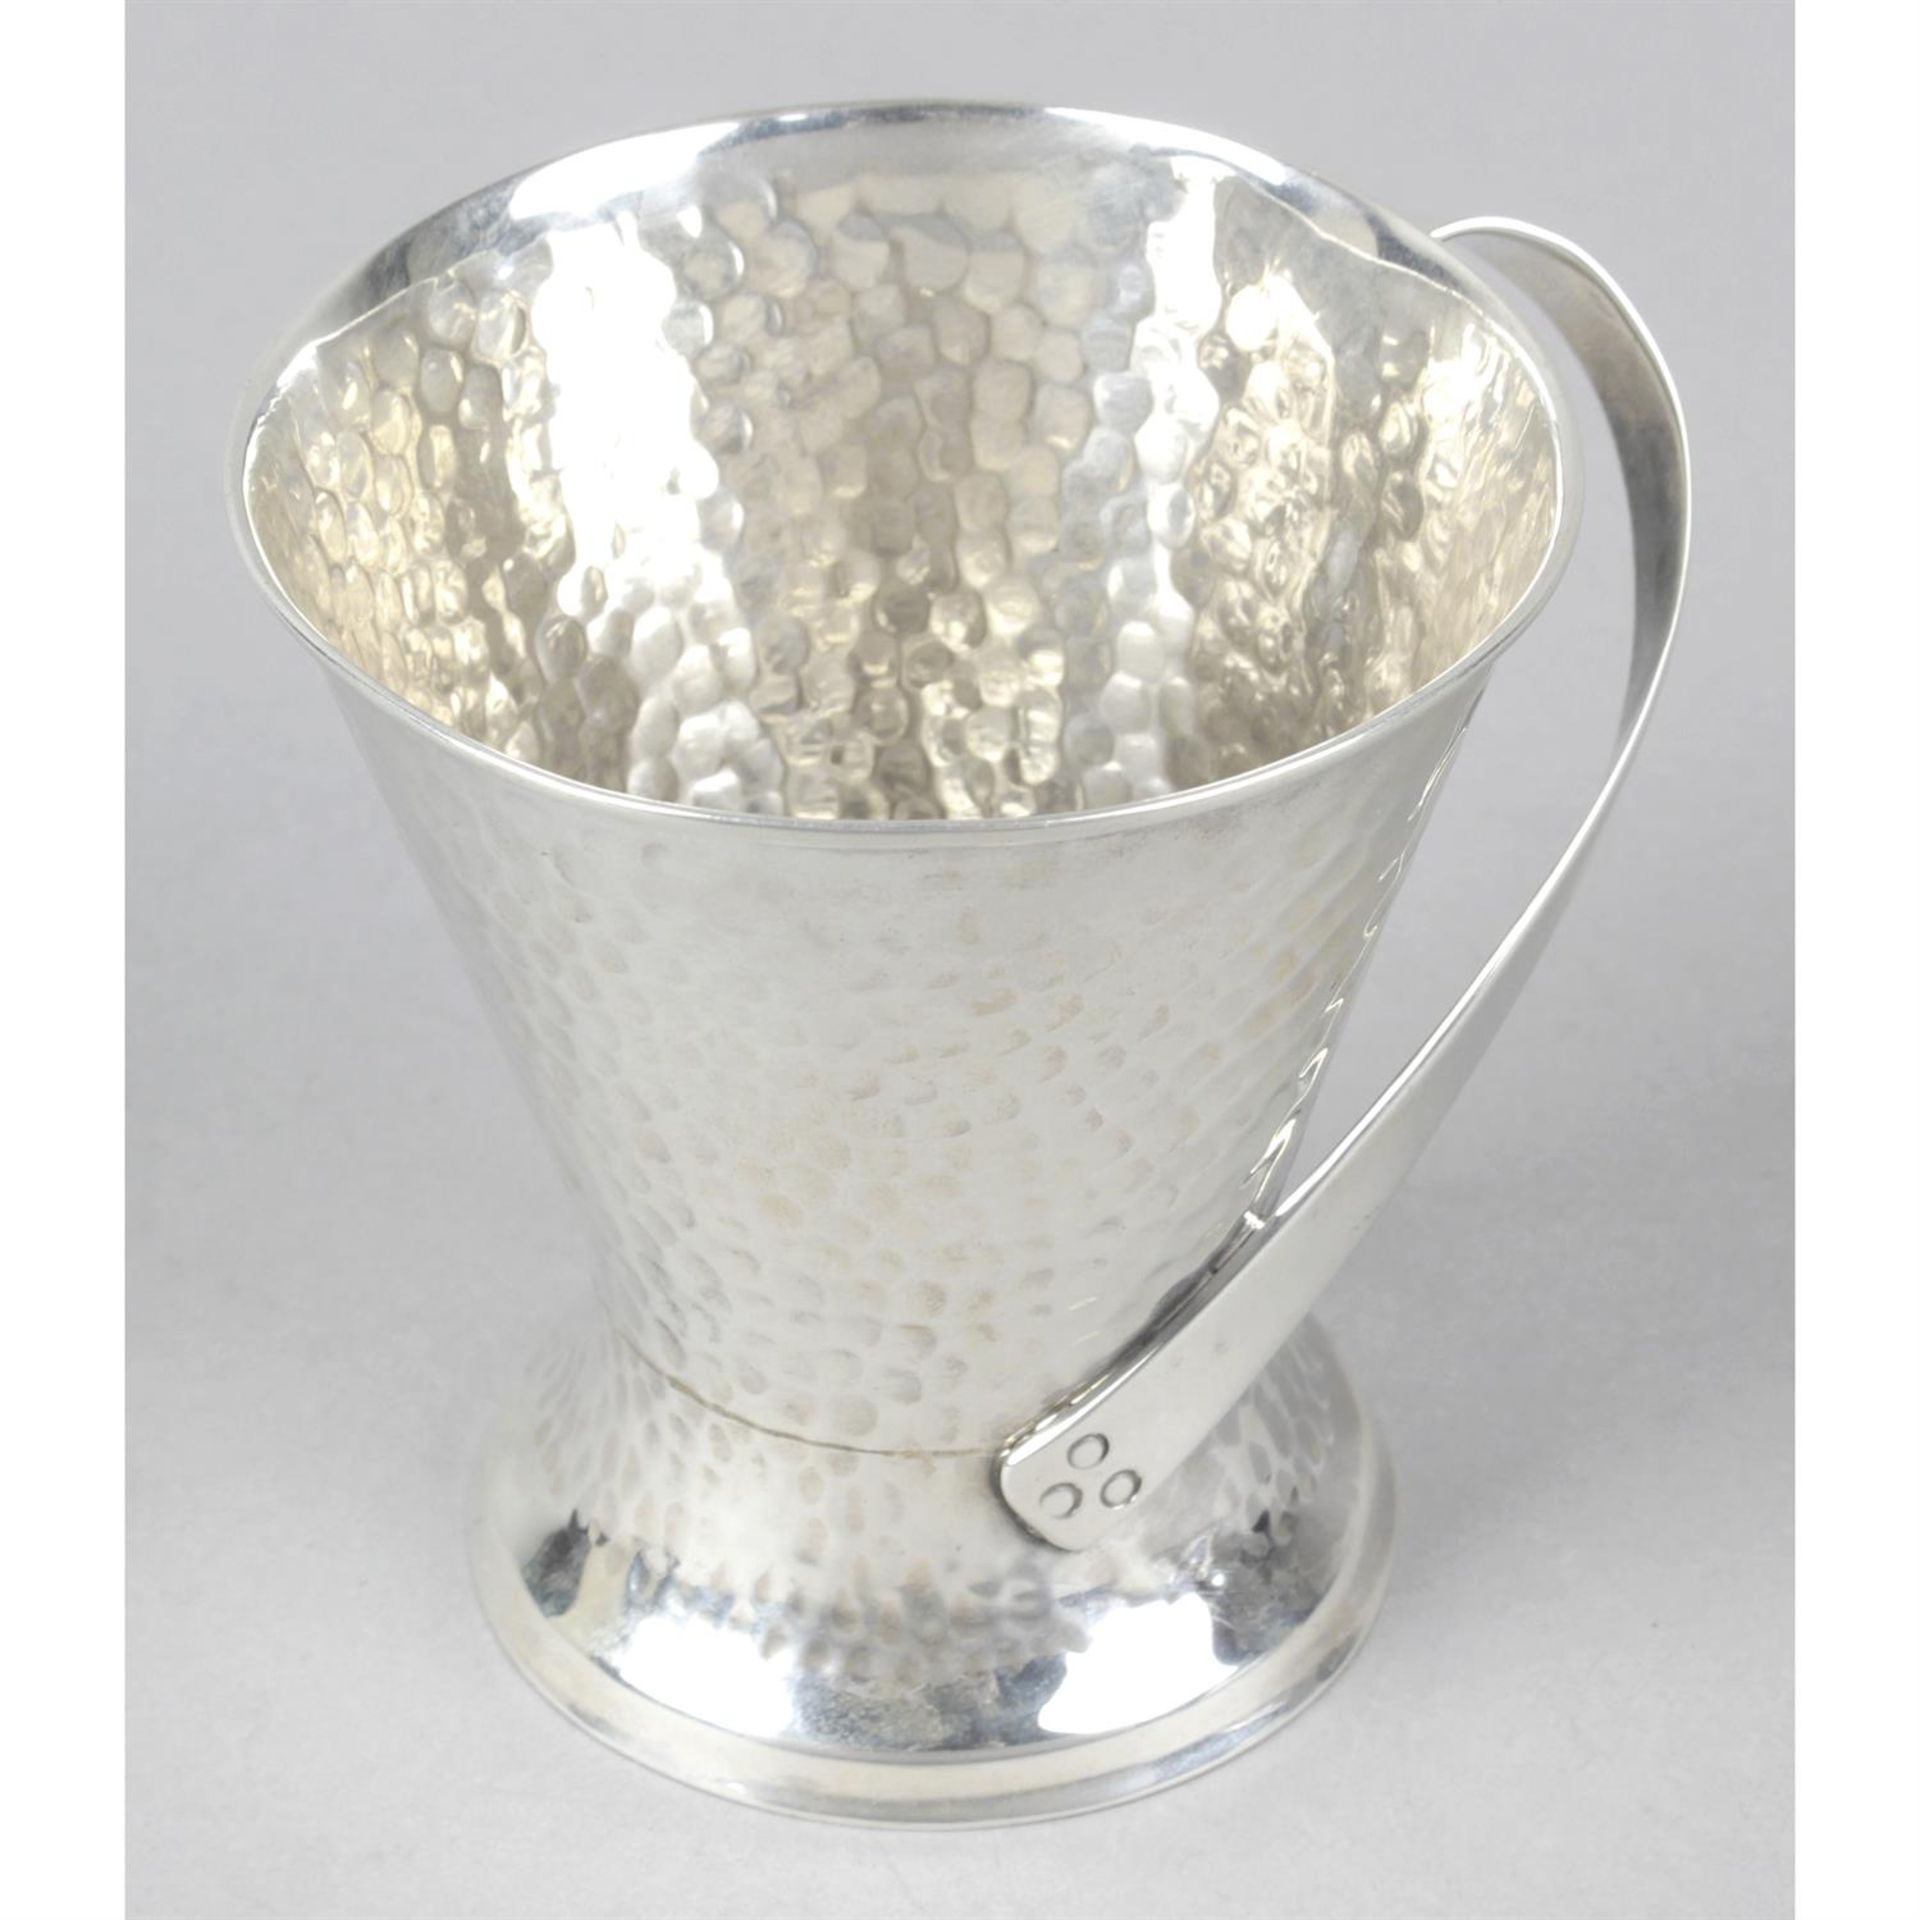 An Edwardian silver Arts & Crafts style mug.